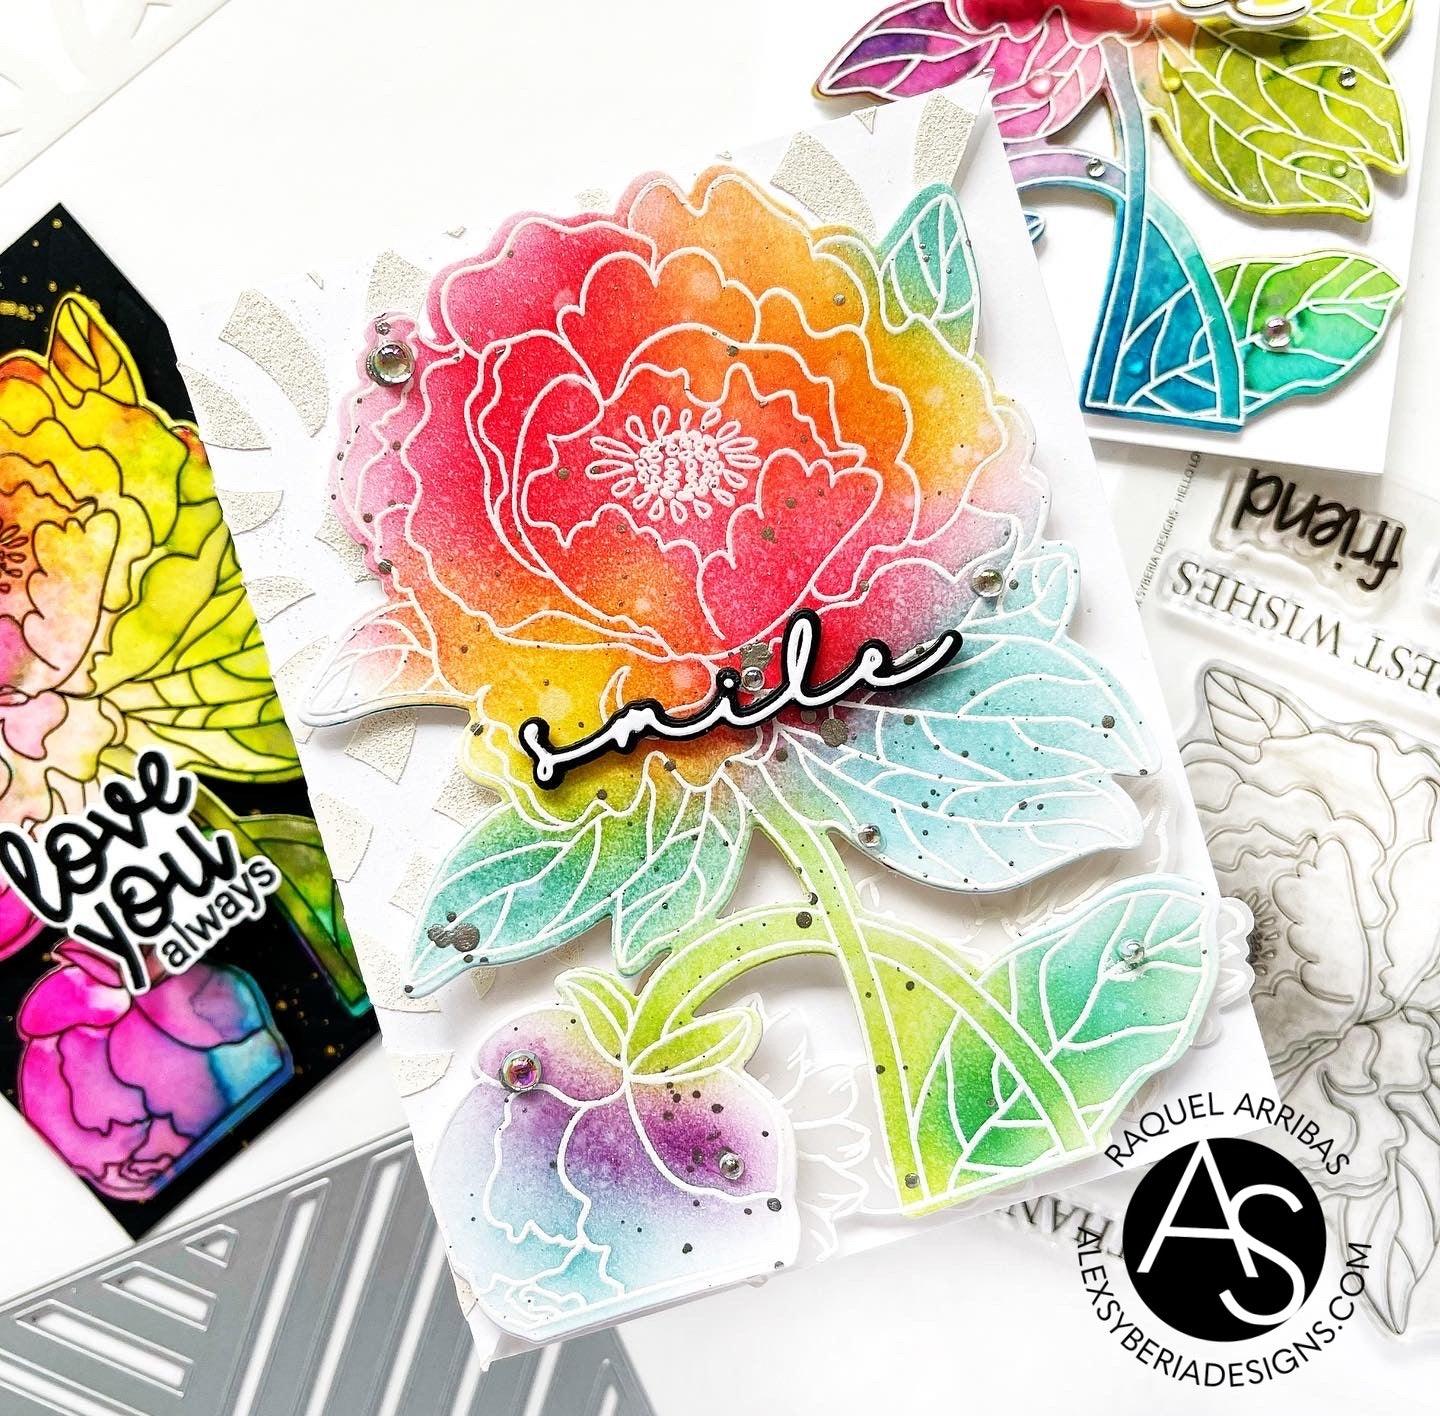 alex-syberia-designs-cardmaking-tutorials-stamps-dies-stencils-smile-die-watercoloring